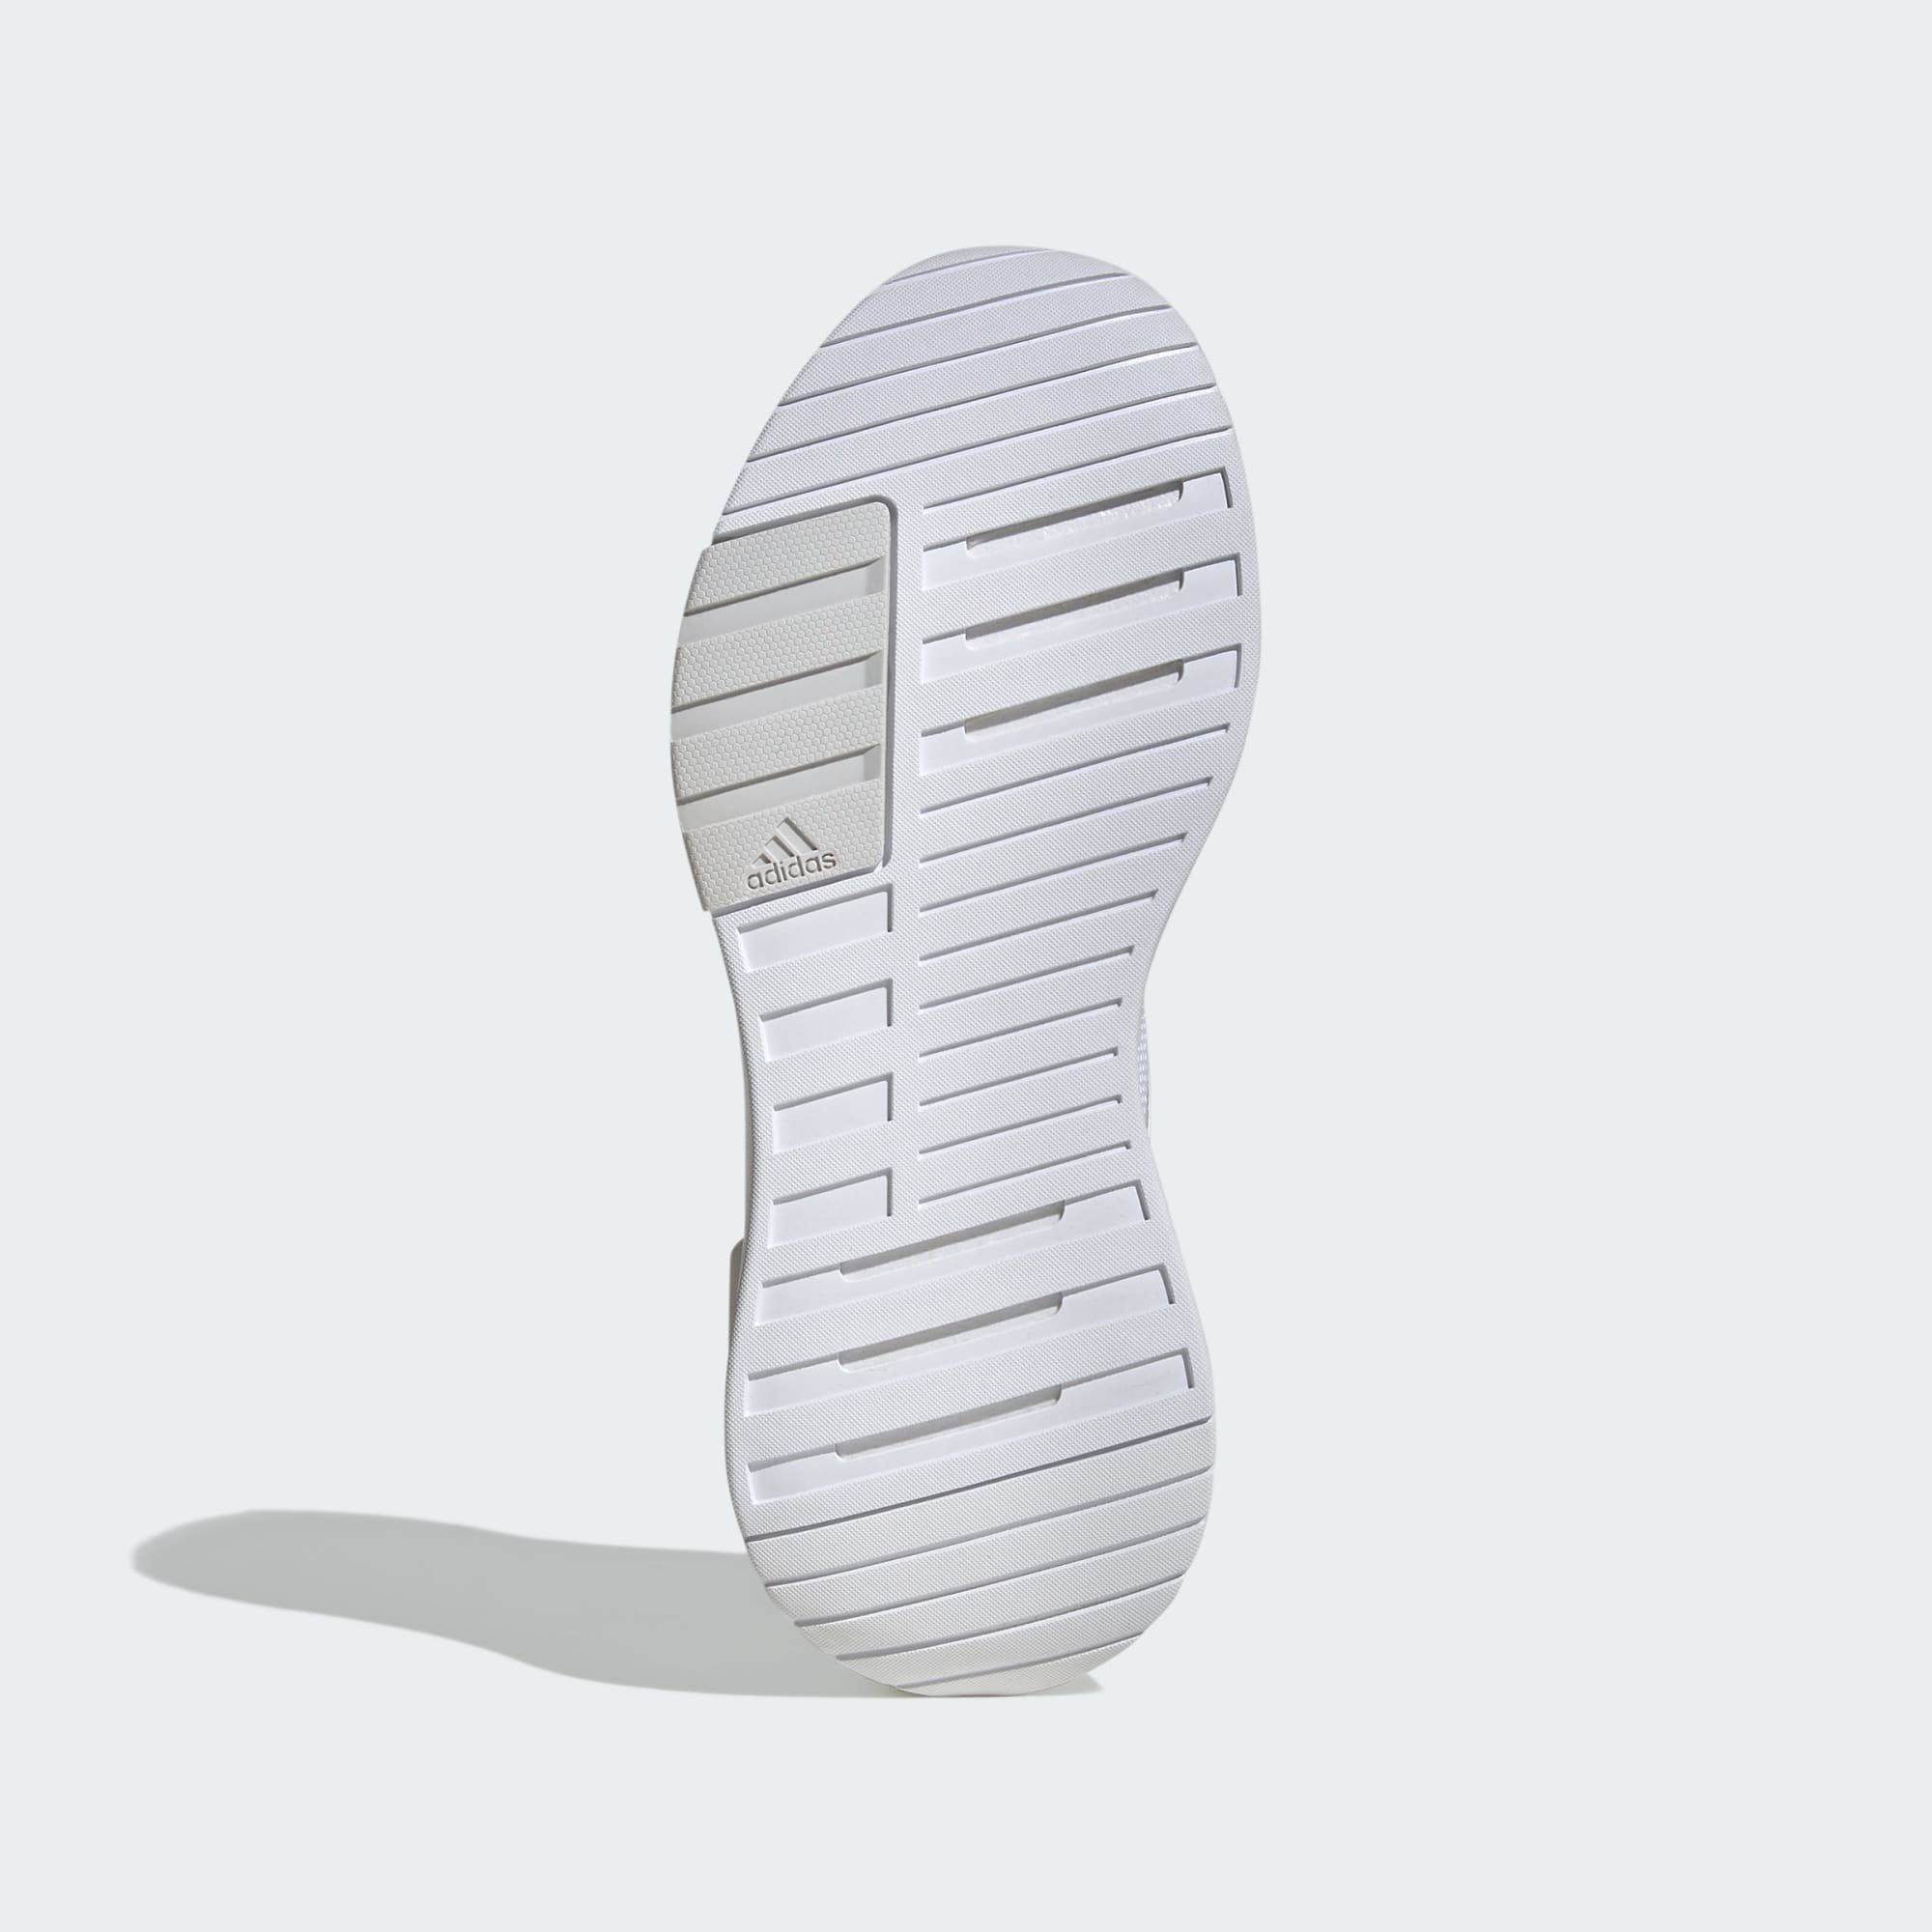 Cloud / One Sneaker Zero White / RACER Sportswear SCHUH Metalic Grey adidas TR23